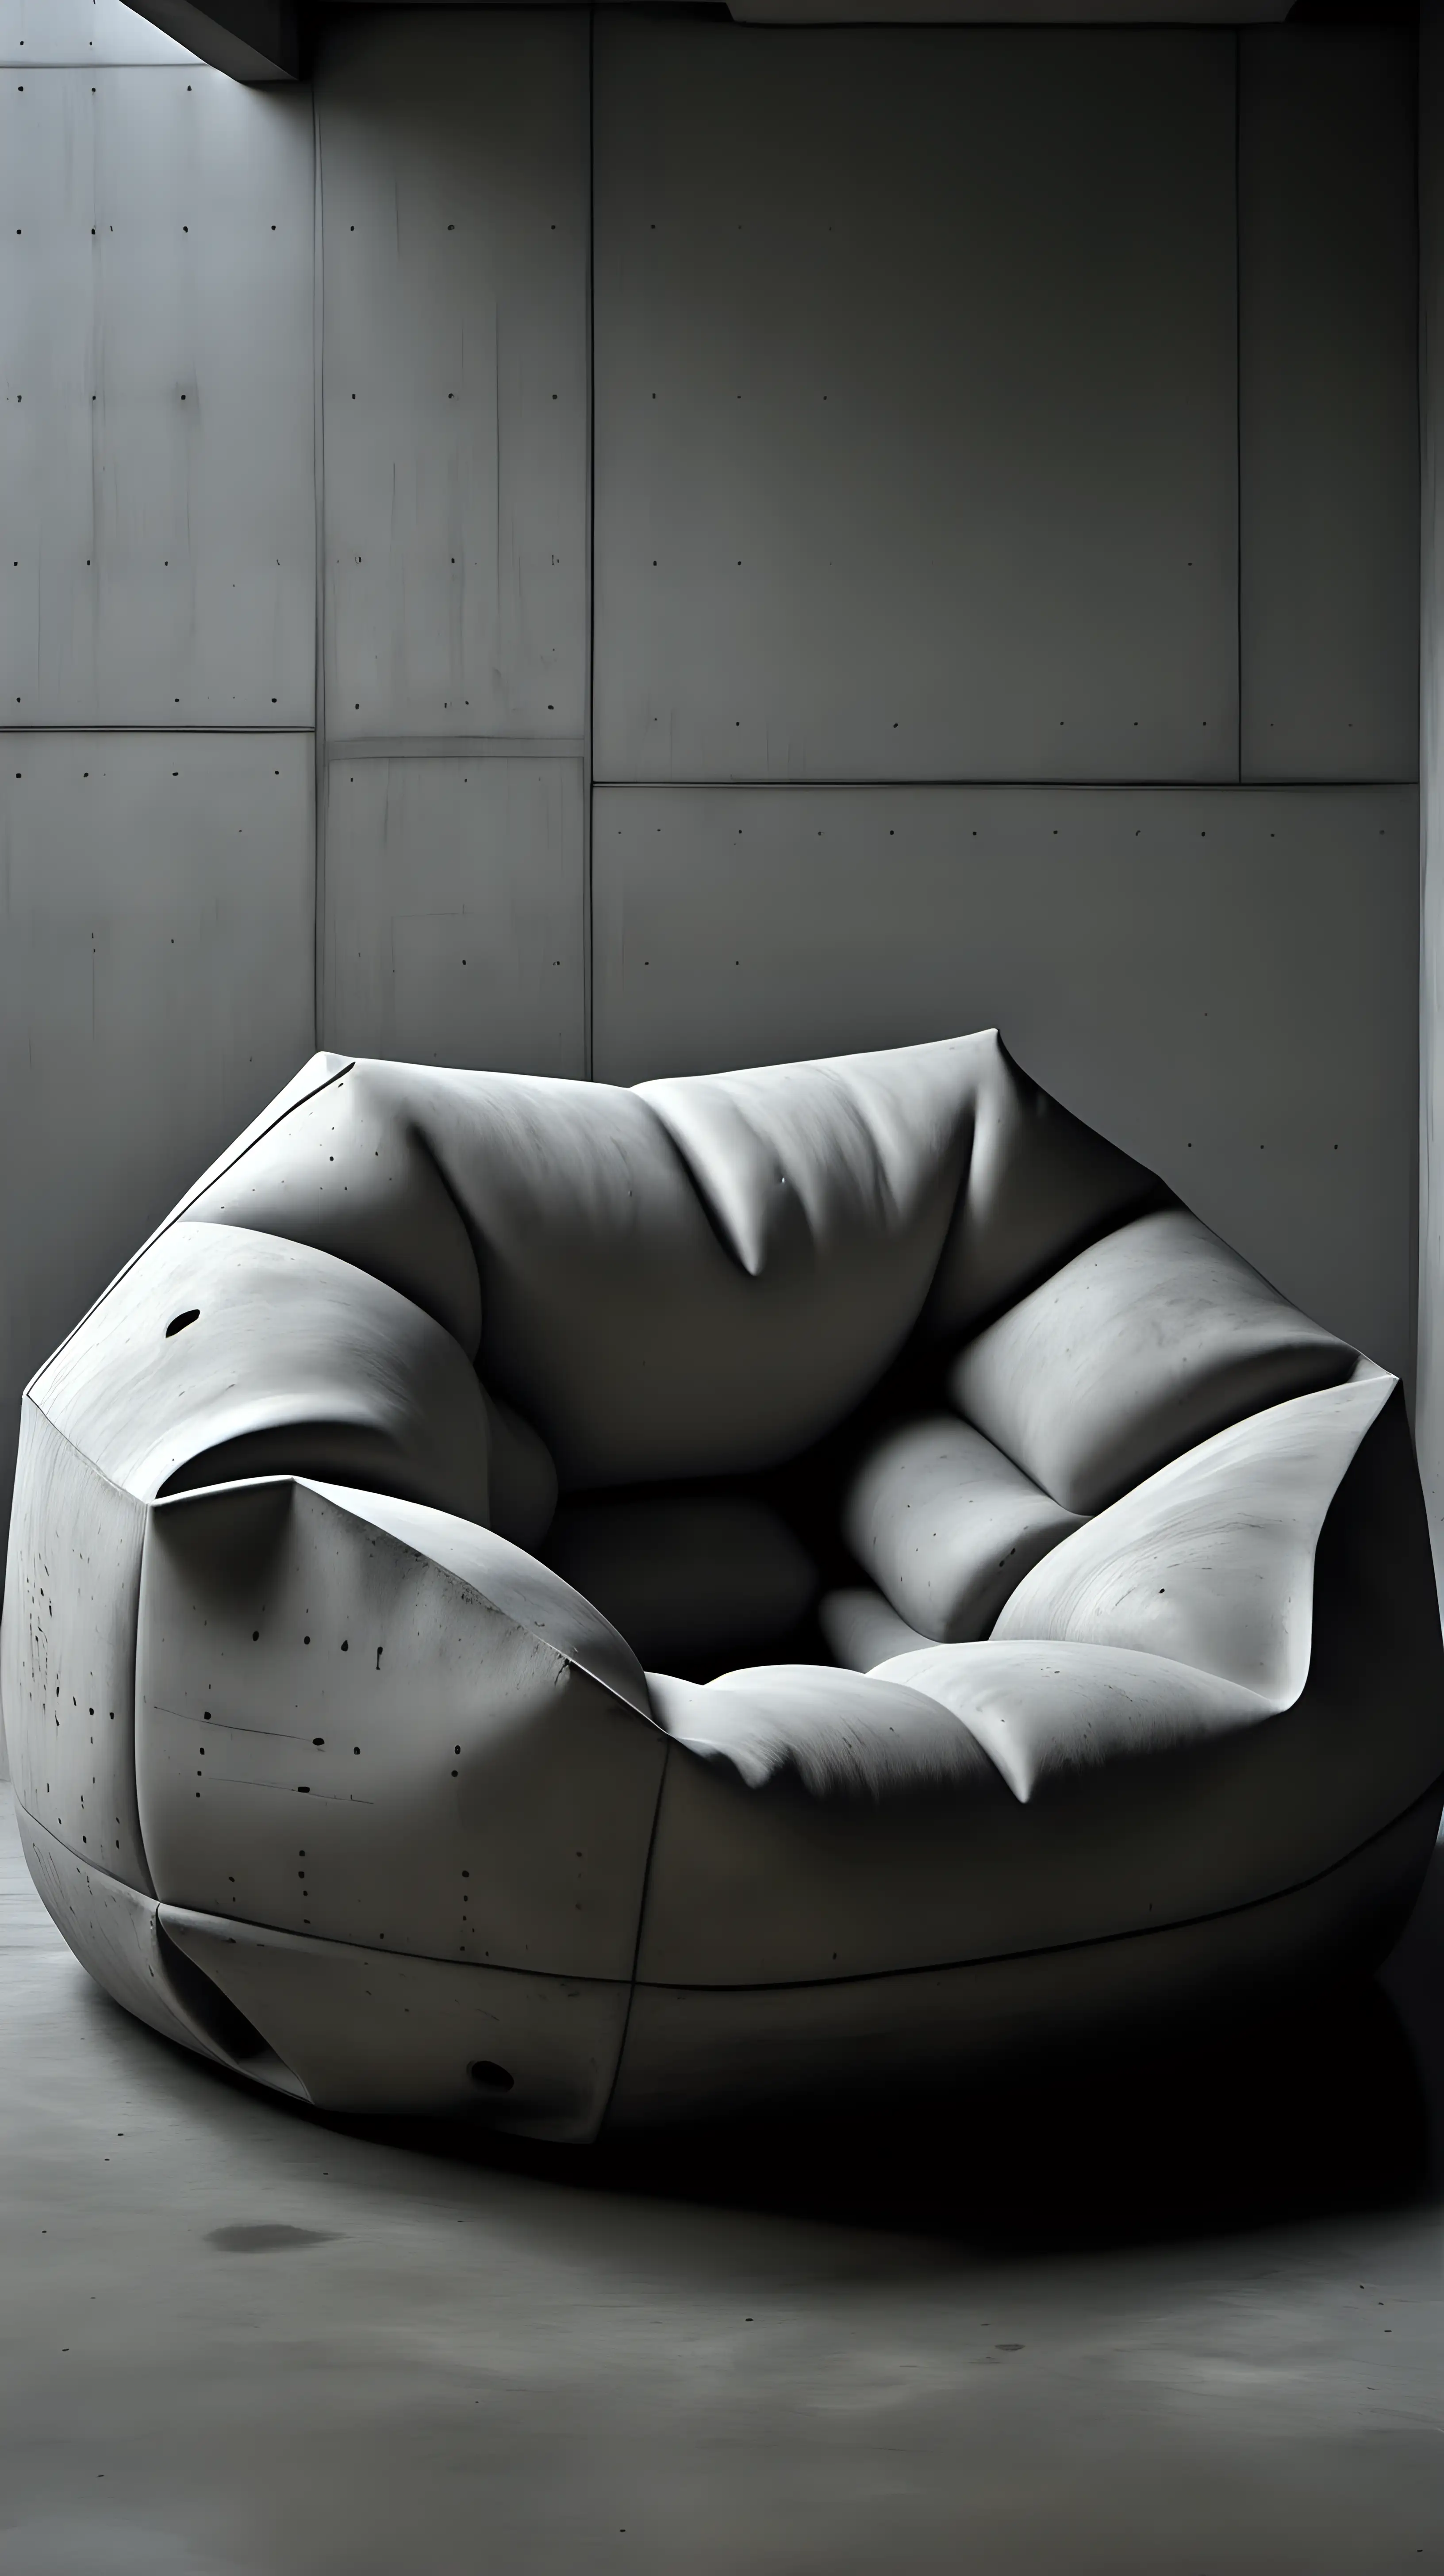 Brutalist Concrete Beanbag Chair Minimalist Seating in Stark Brutalist Architectural Style